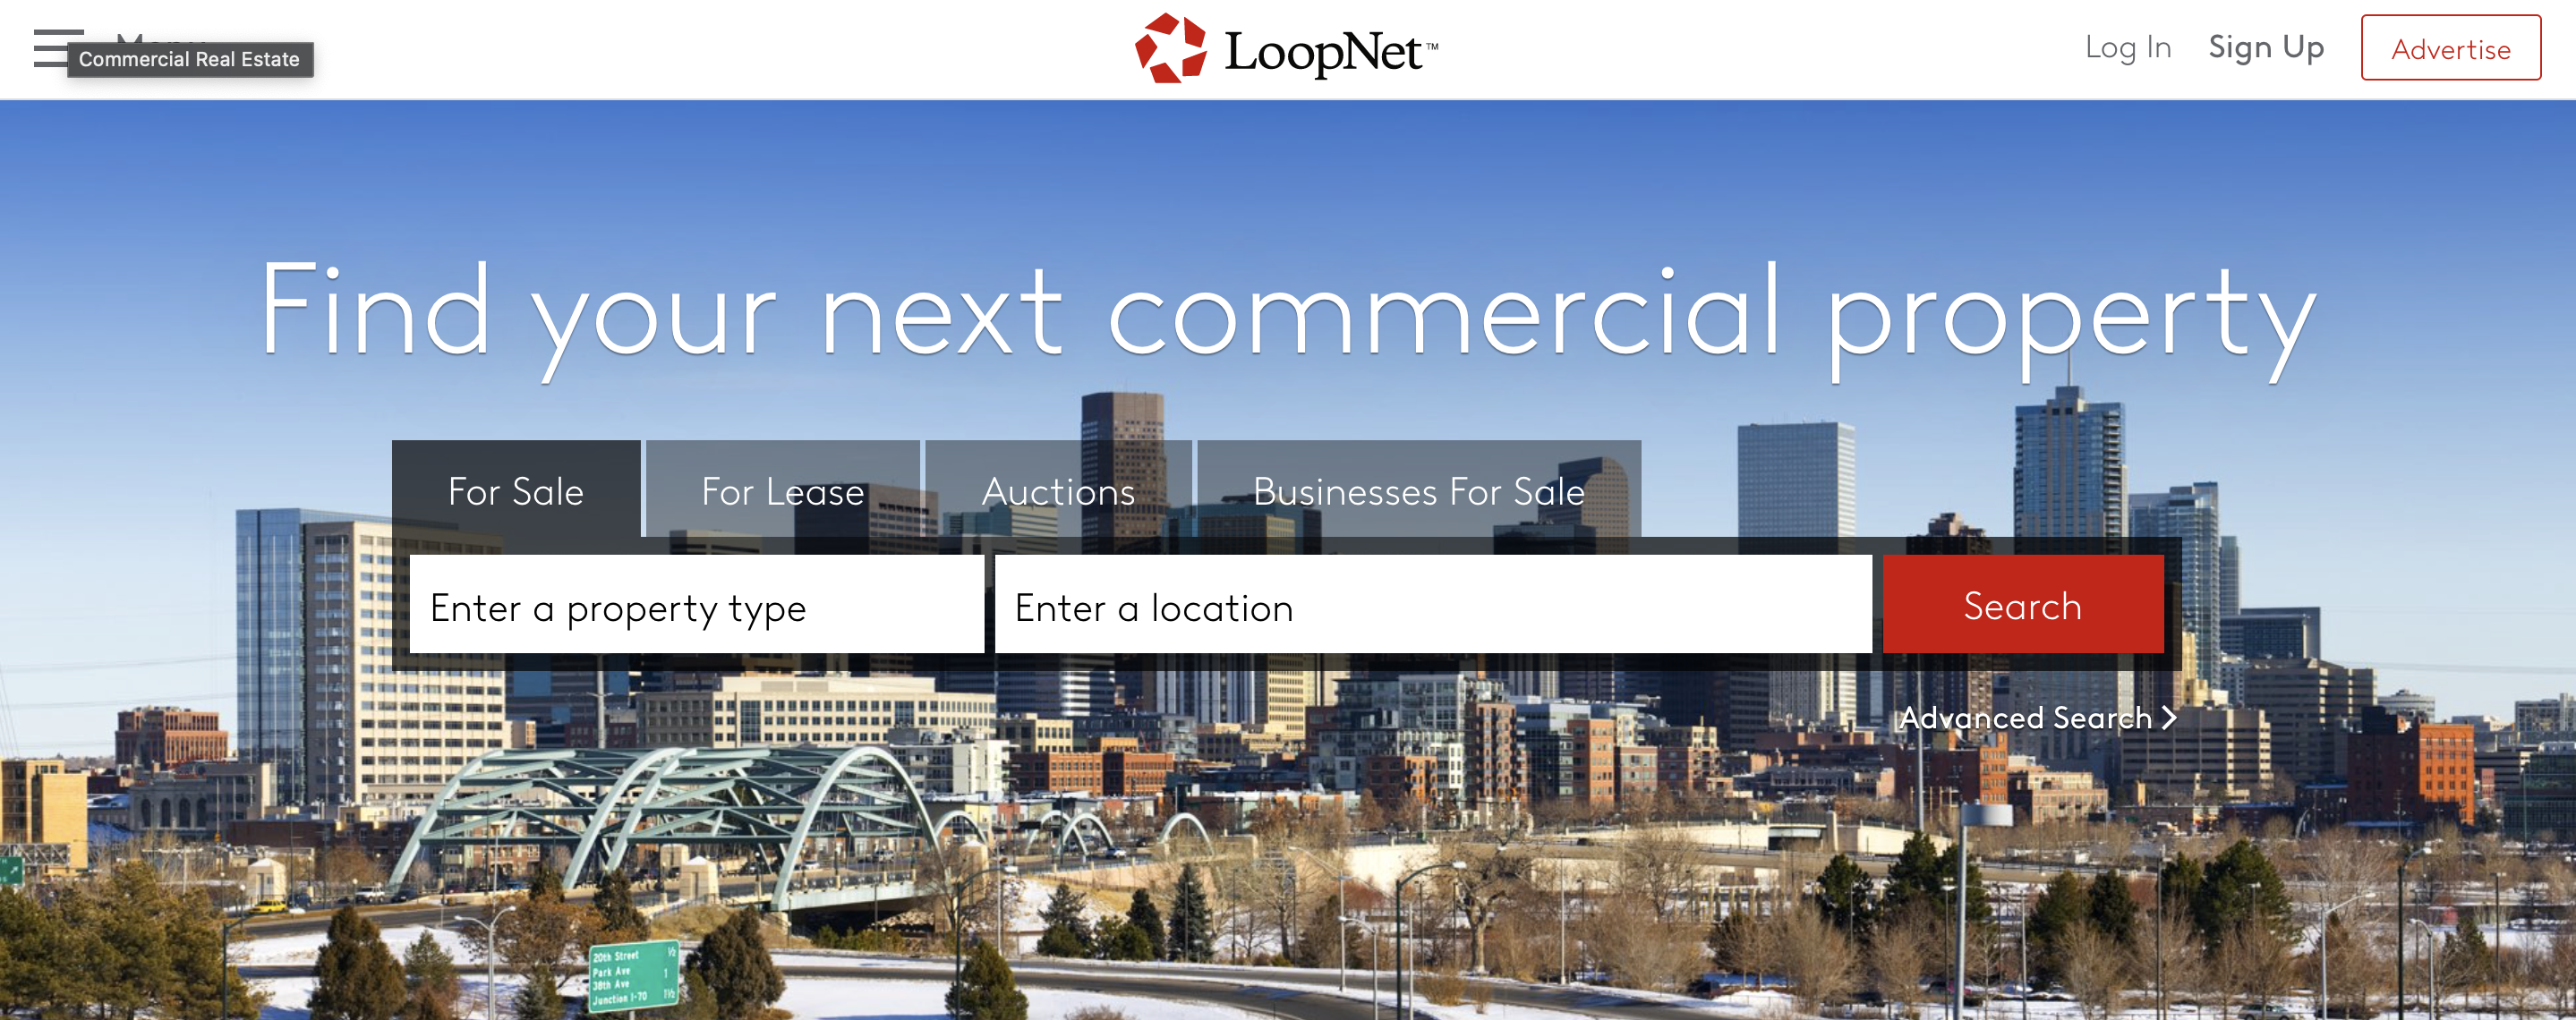 CRE data providers | LoopNet